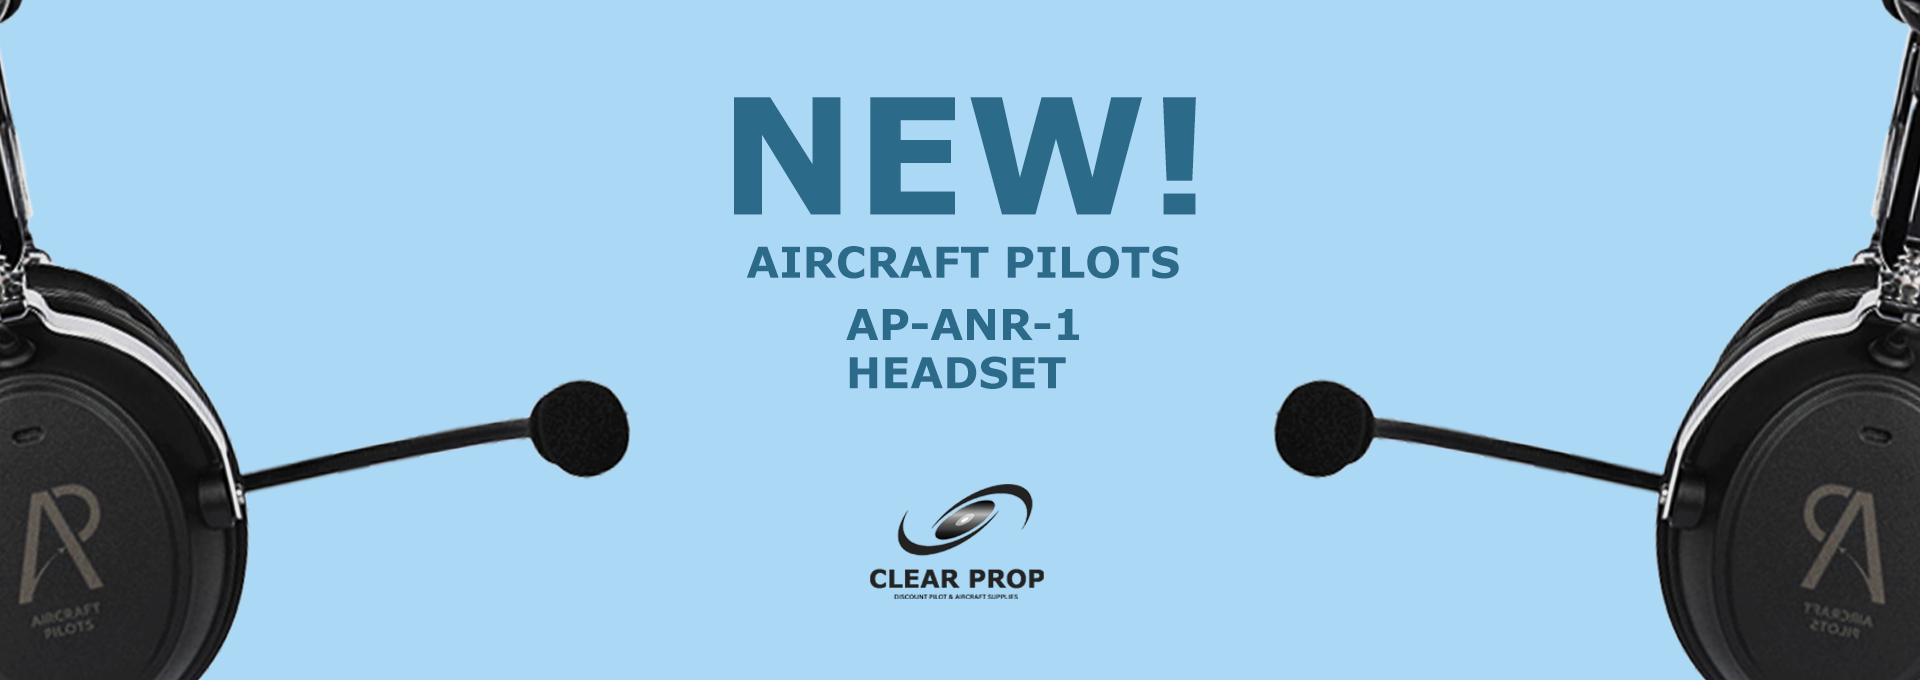 Aircraft Pilots ANR Headset